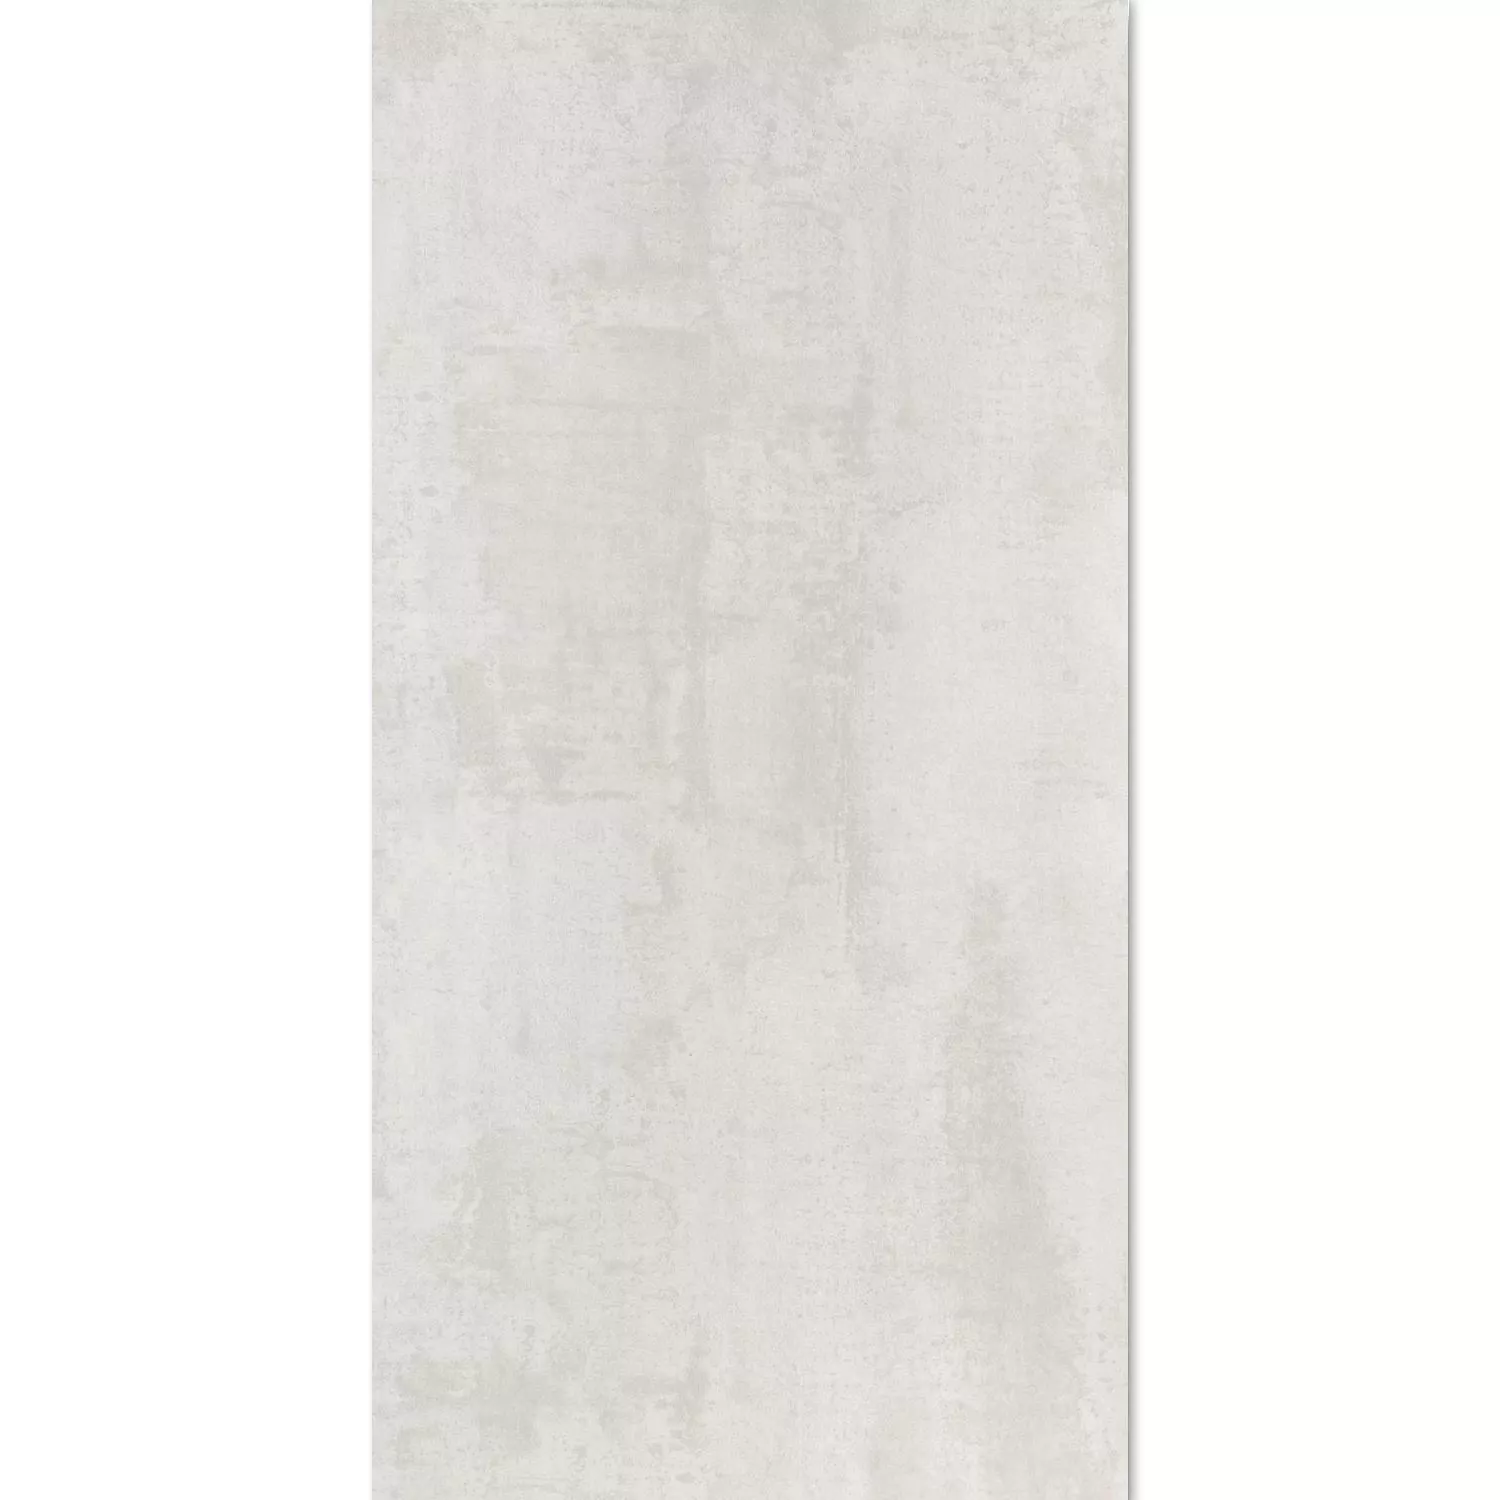 Podlahové Dlaždice Herion Kovový Vzhled Lappato Blanco 45x90cm